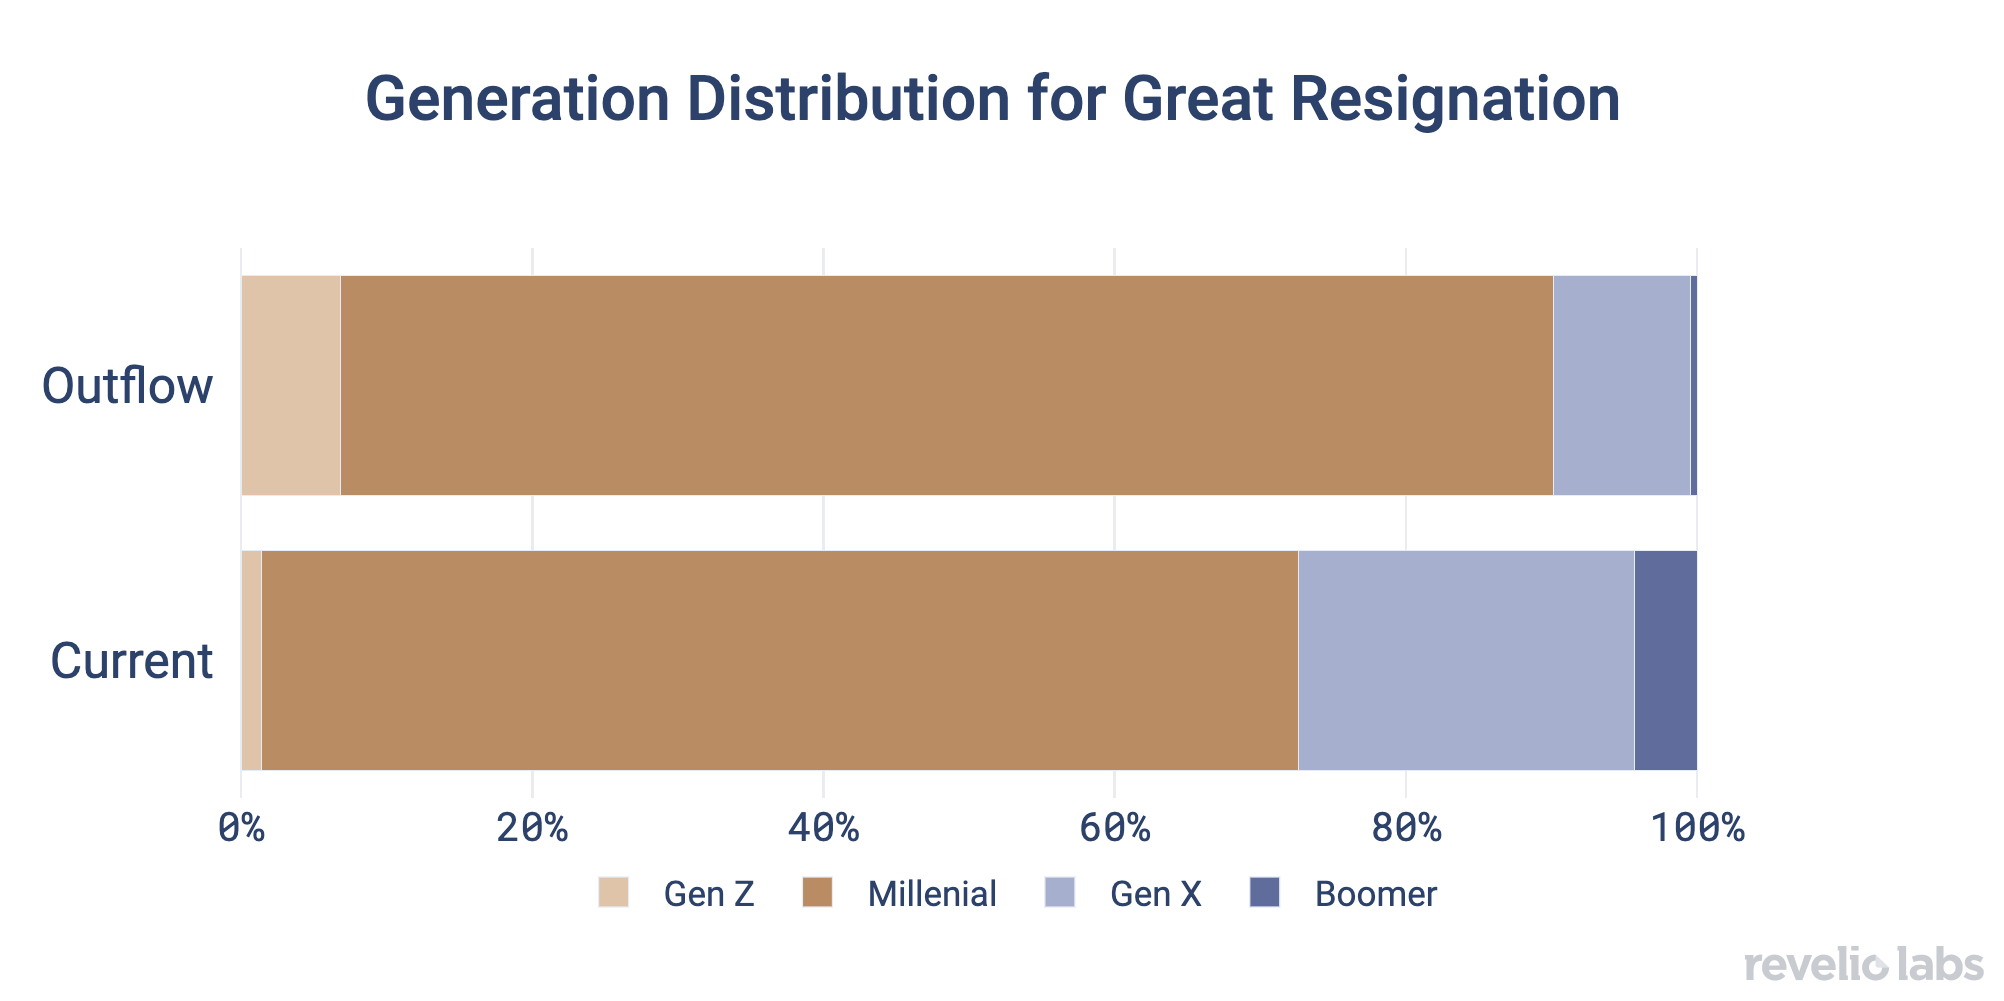 Generation Distribution for Great Resignation